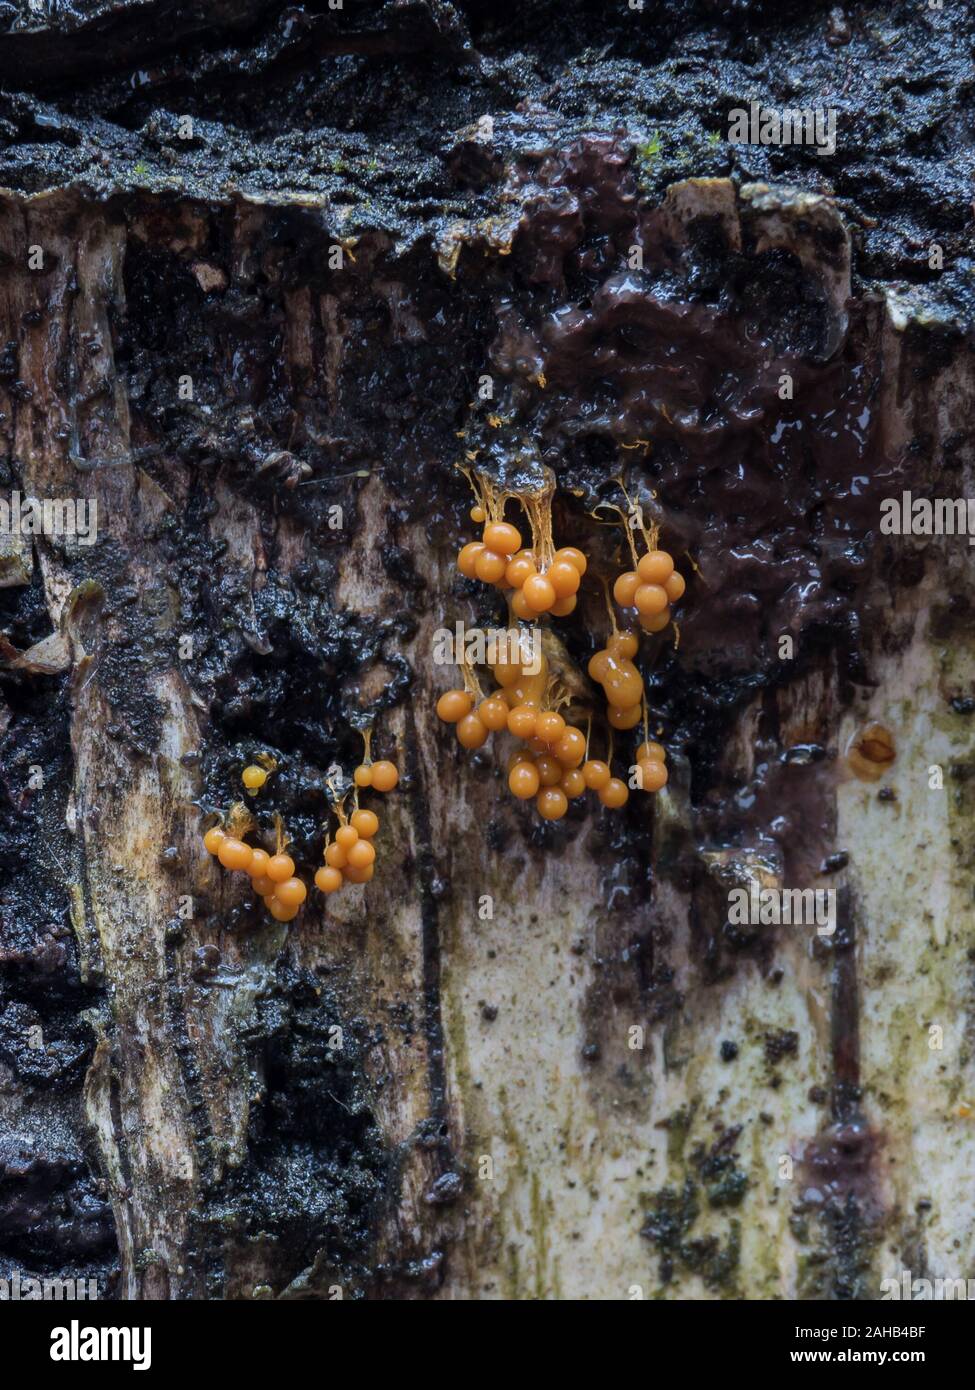 Sporangia of the slime mold (Myxogastria) Badhamia utricularis growing on Phlebia radiata fungus on a birch trunk in Görvälns naturreservat, Järfälla Stock Photo